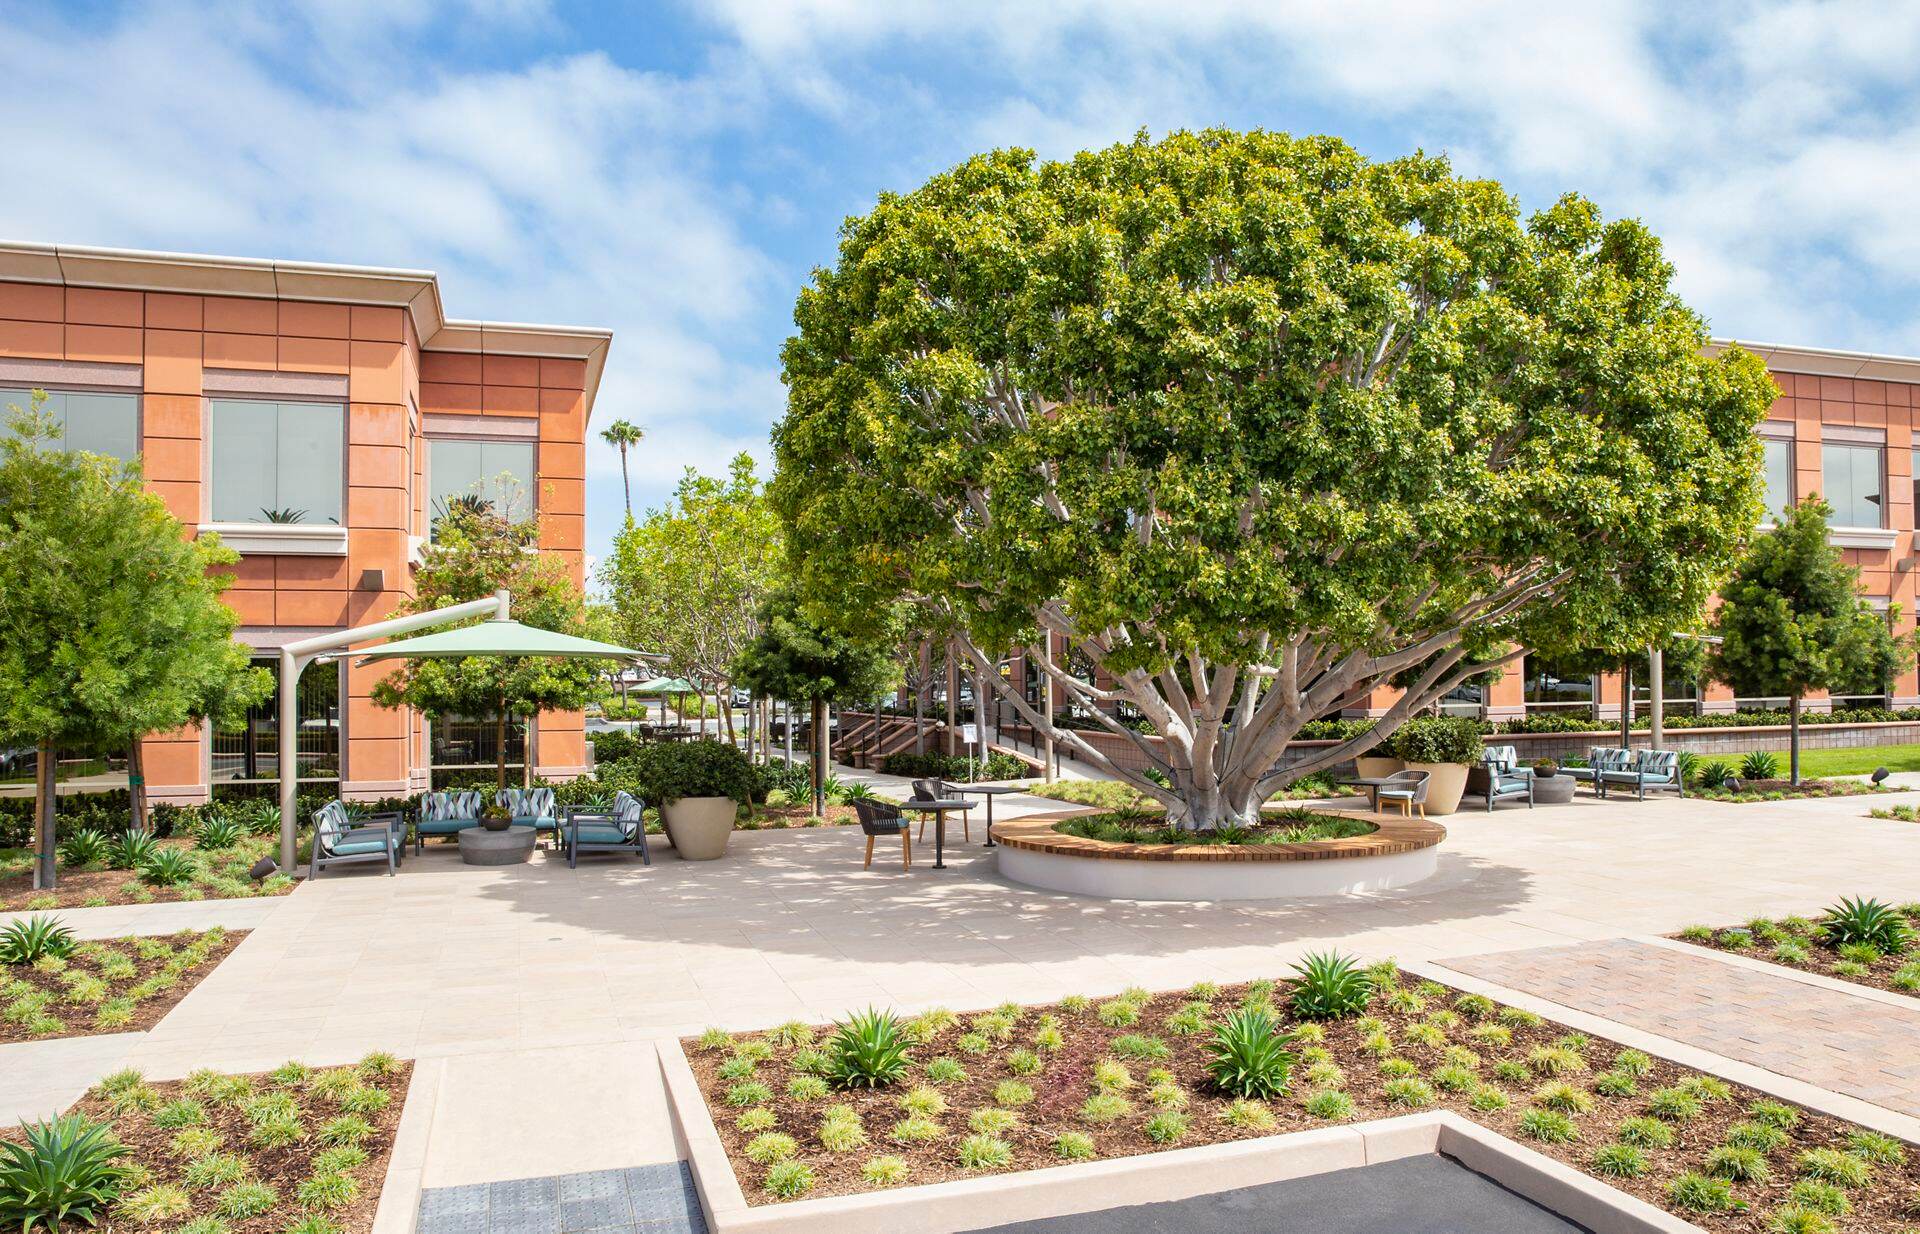 Exterior view of Corporate Plaza in Newport Beach, CA.